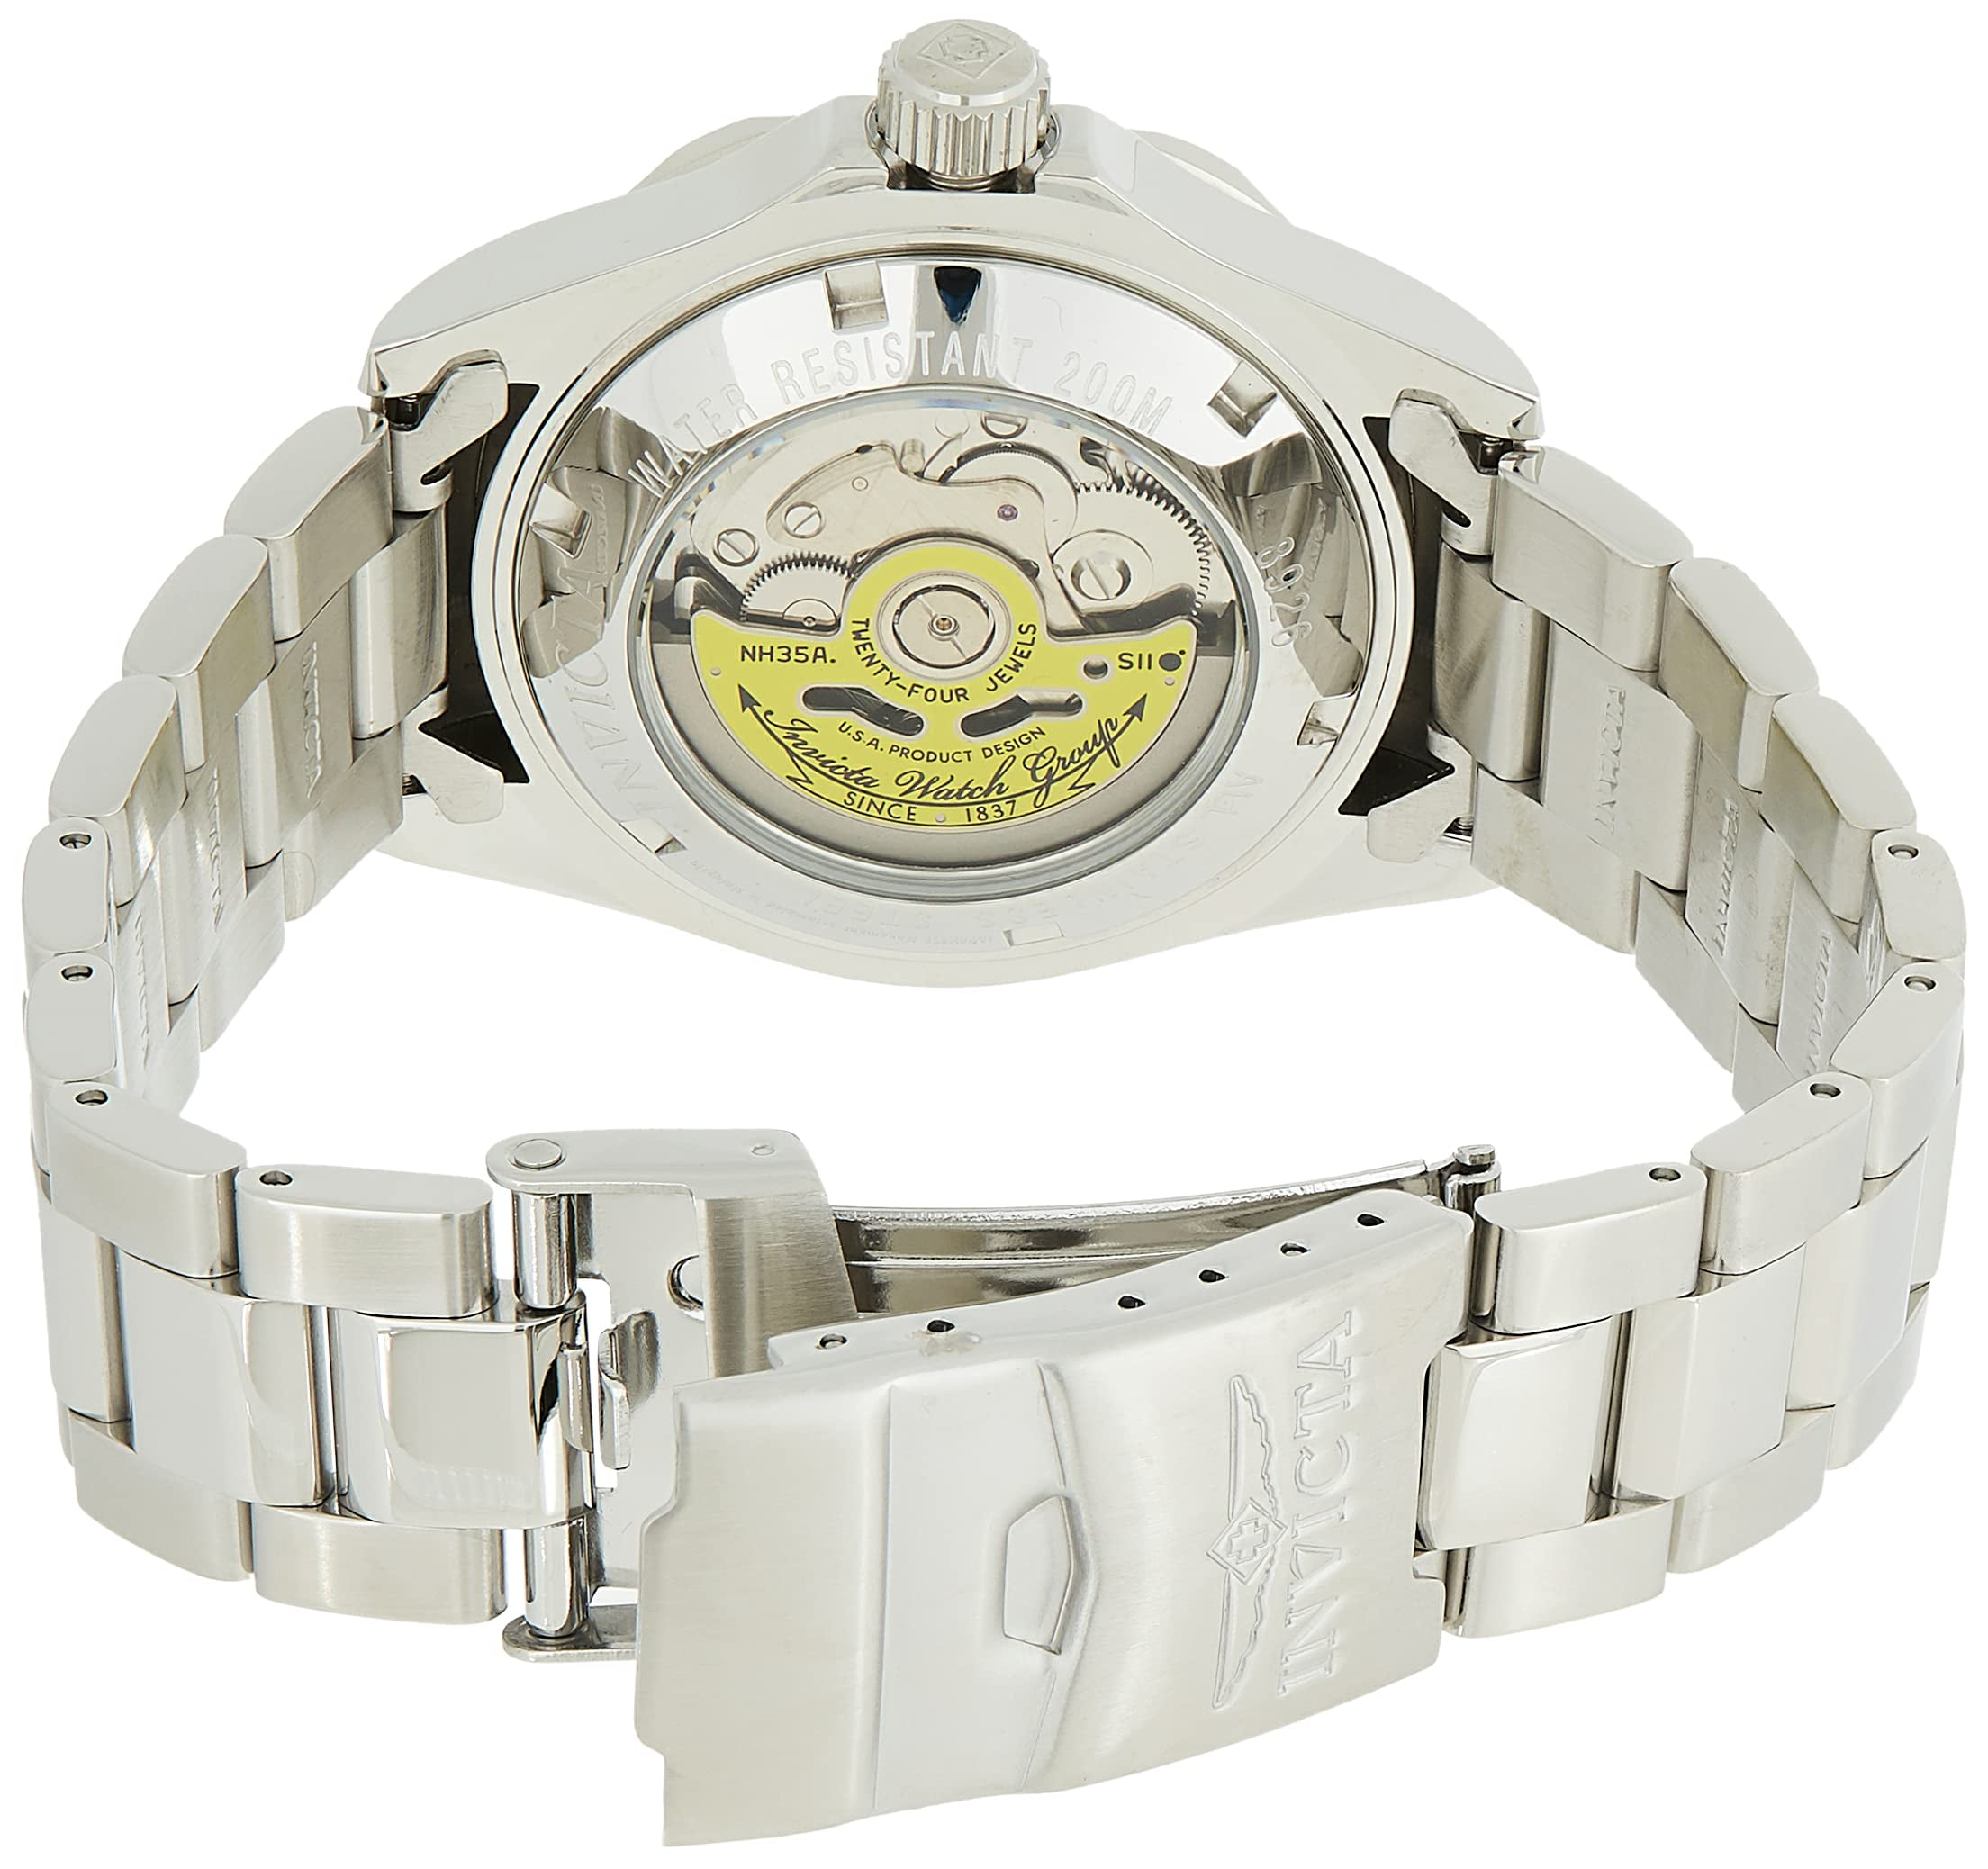 INVICTA] Invicta Pro Diver 8926OB. My First Automatic Watch. : r/Watches